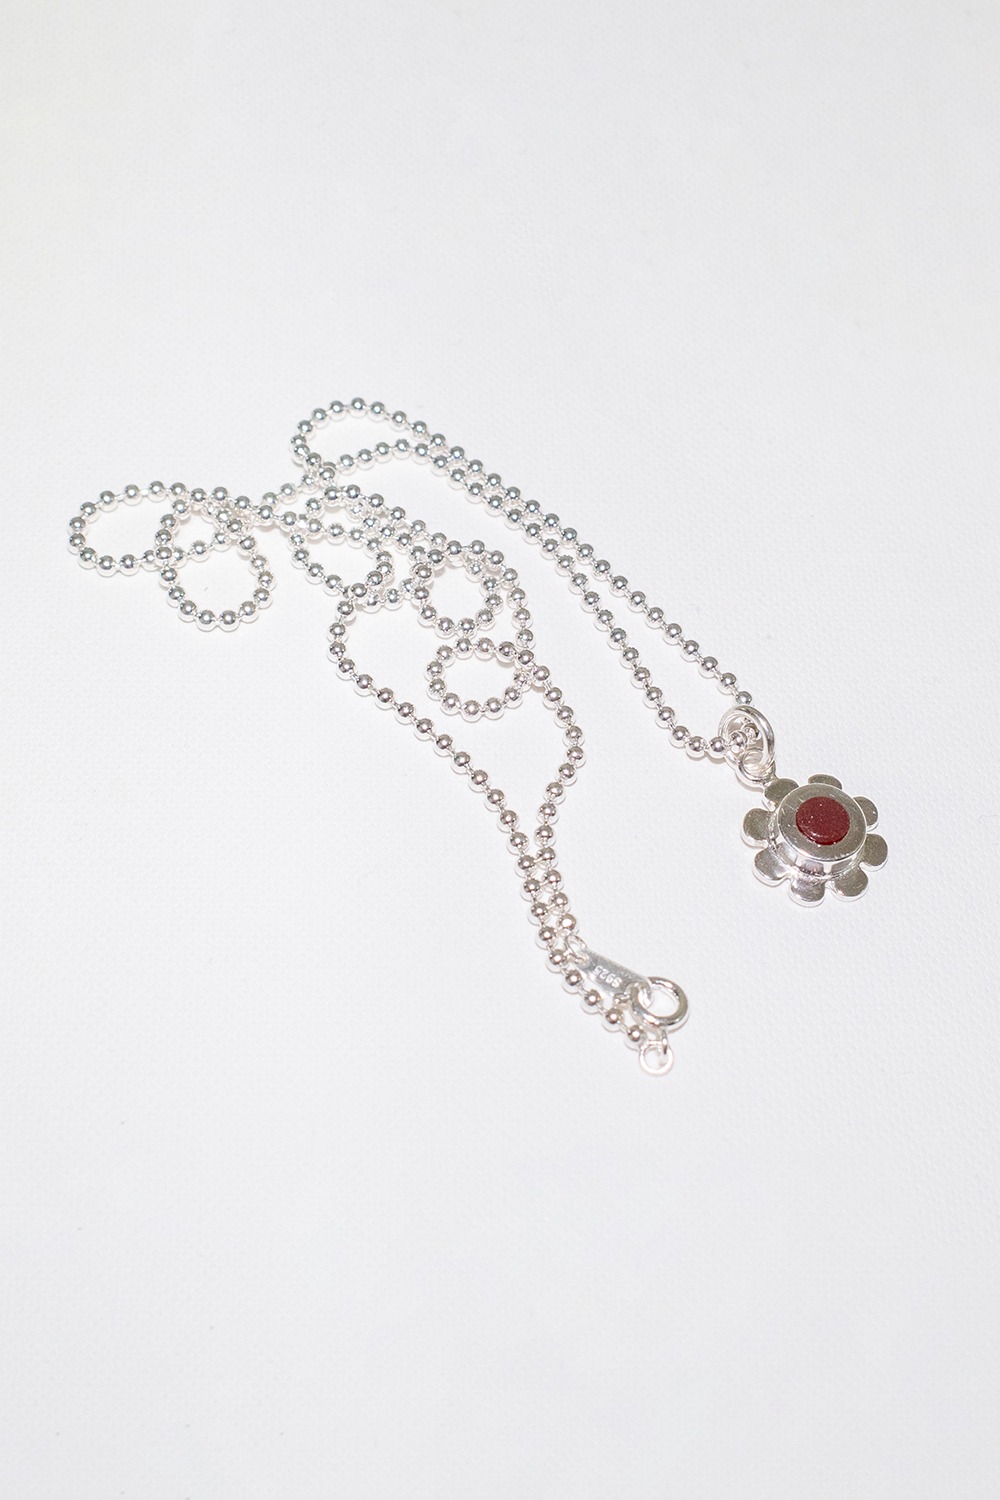 HOTDRYGREY_Flower necklace 02